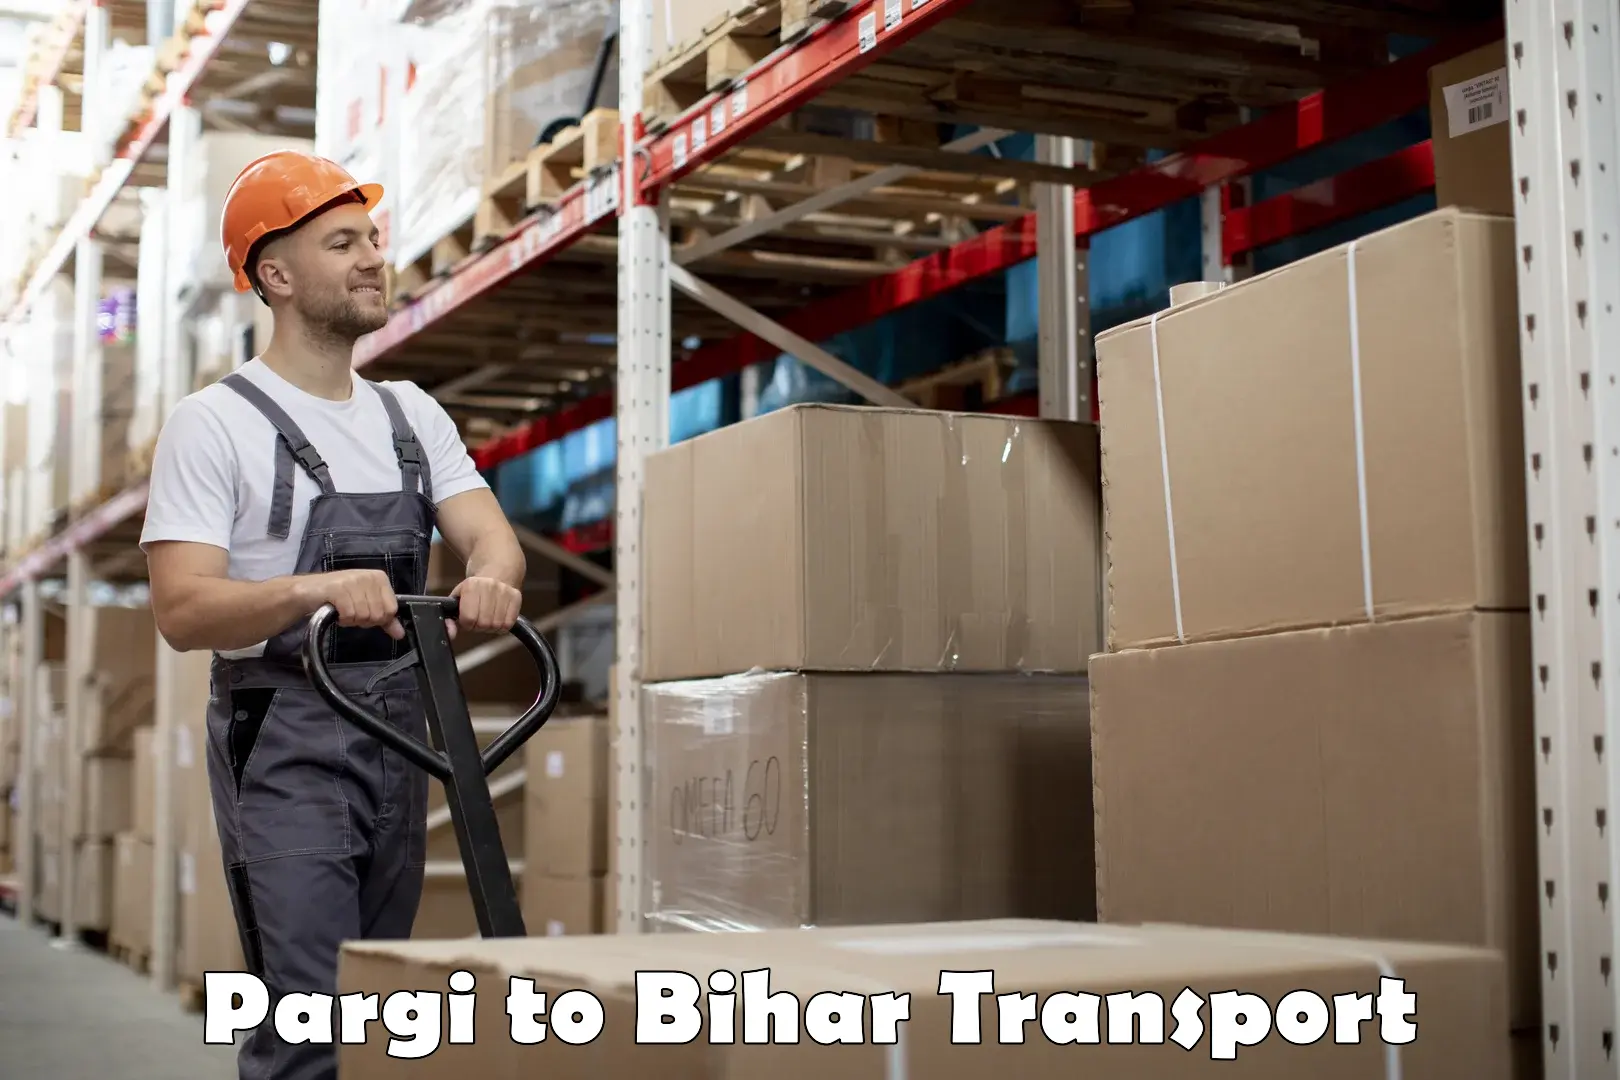 Truck transport companies in India Pargi to Vaishali